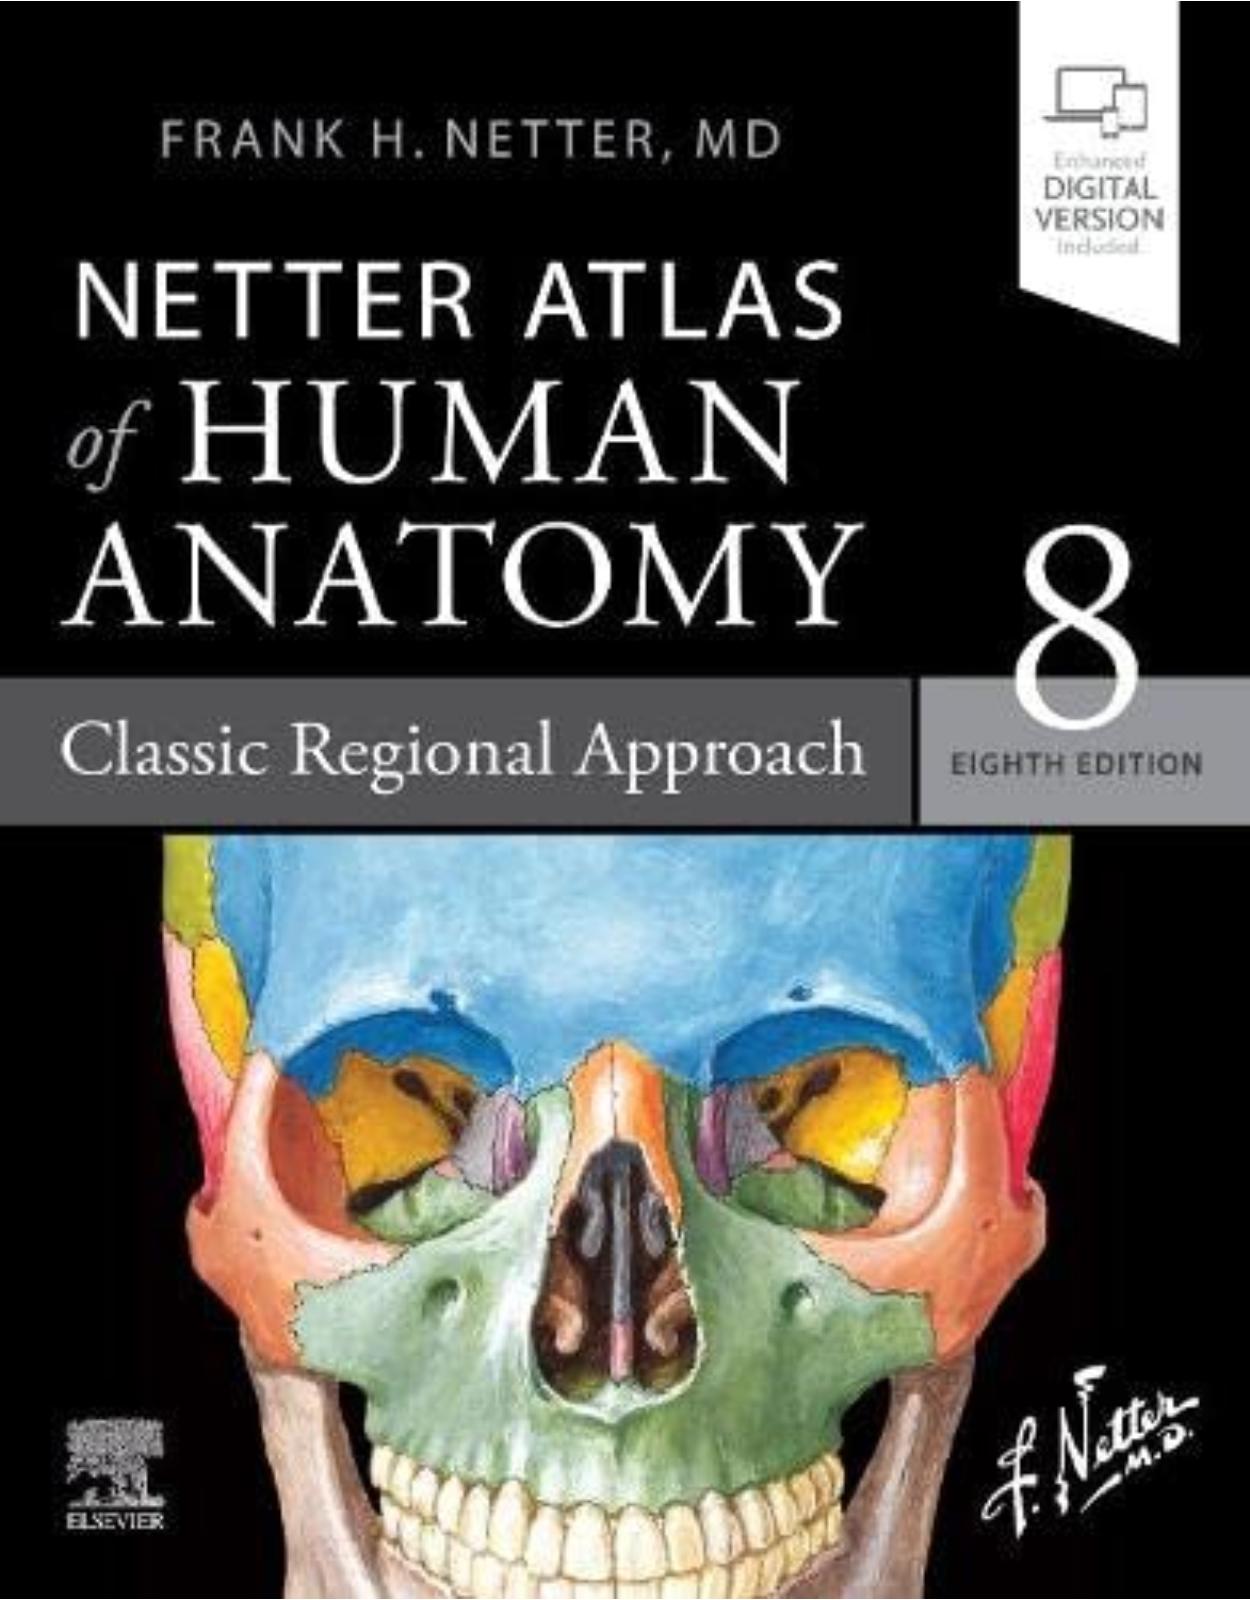 Netter Atlas of Human Anatomy: Classic Regional Approach: paperback + eBook